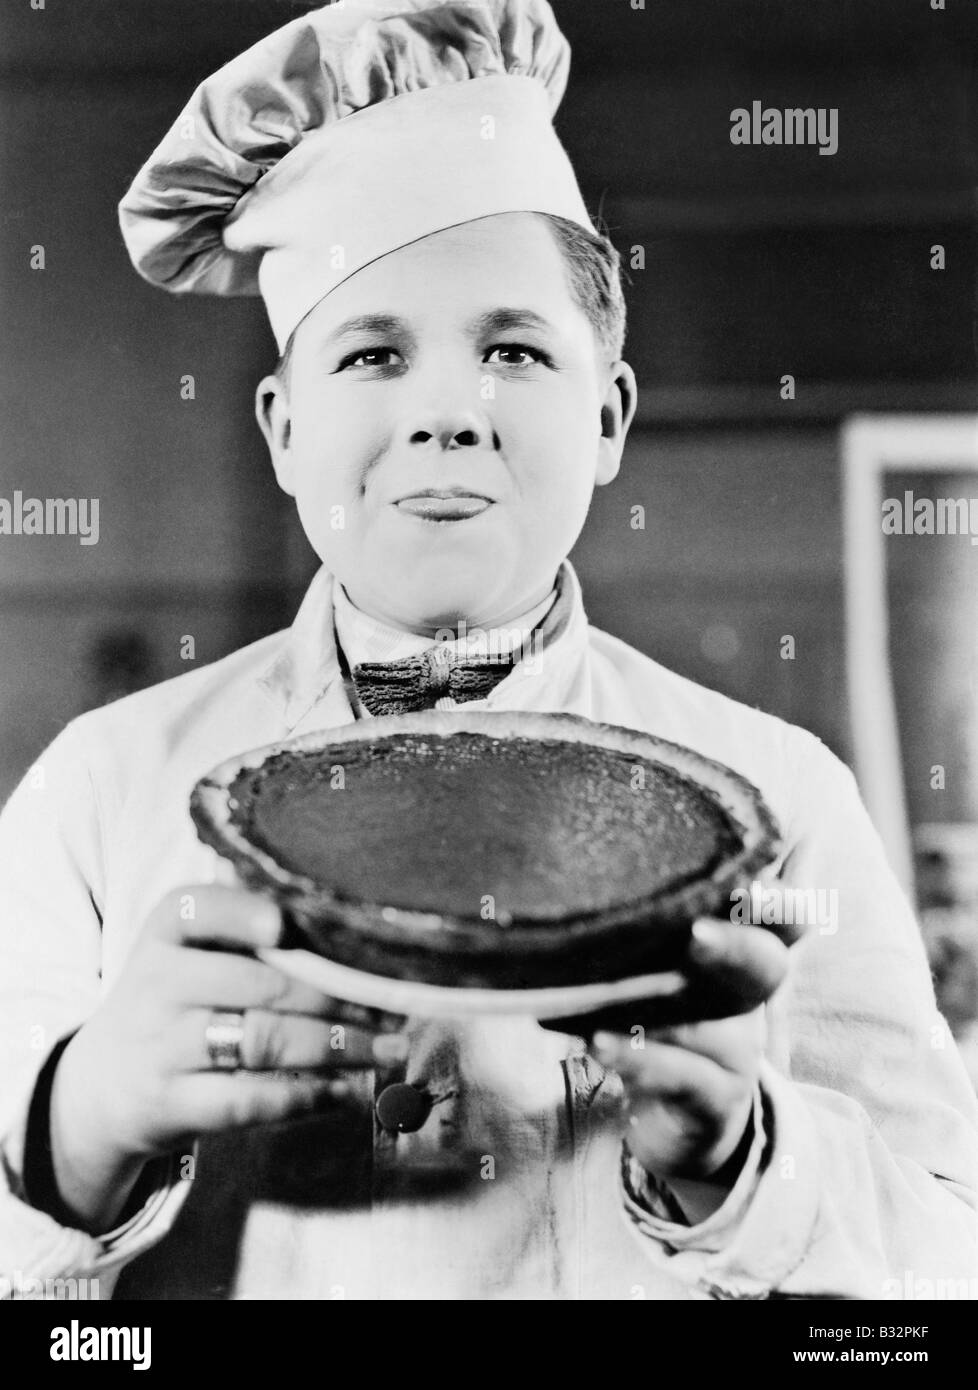 Portrait of chef with pie Stock Photo